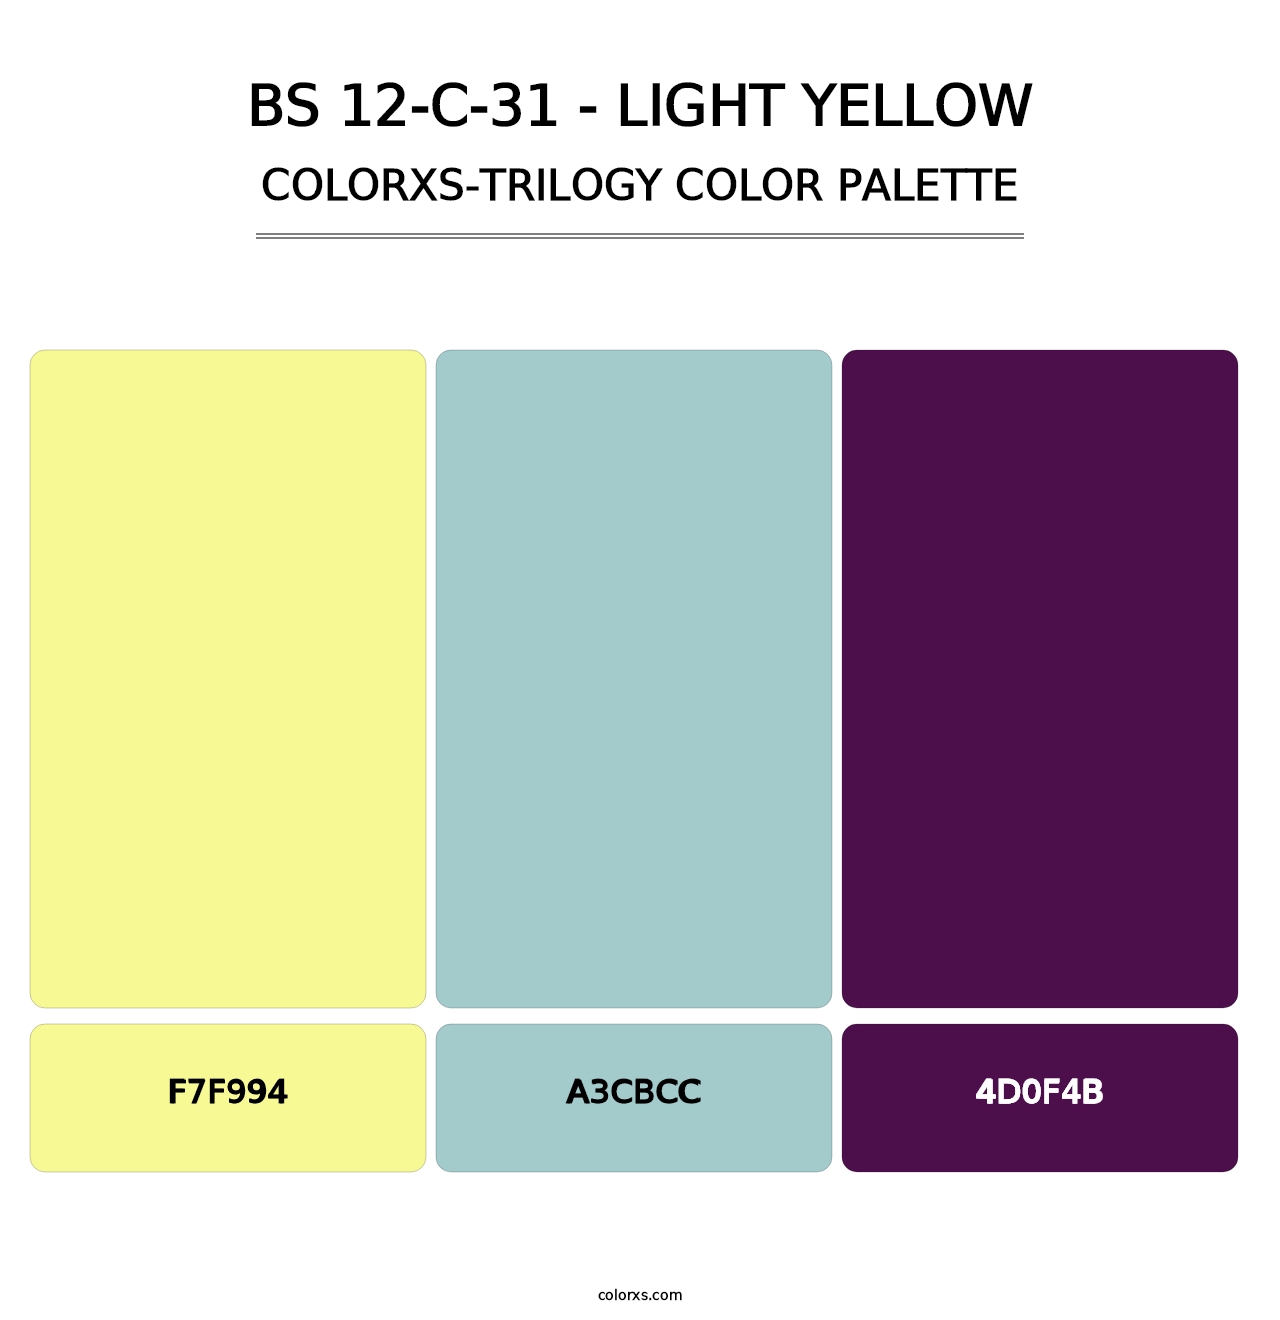 BS 12-C-31 - Light Yellow - Colorxs Trilogy Palette